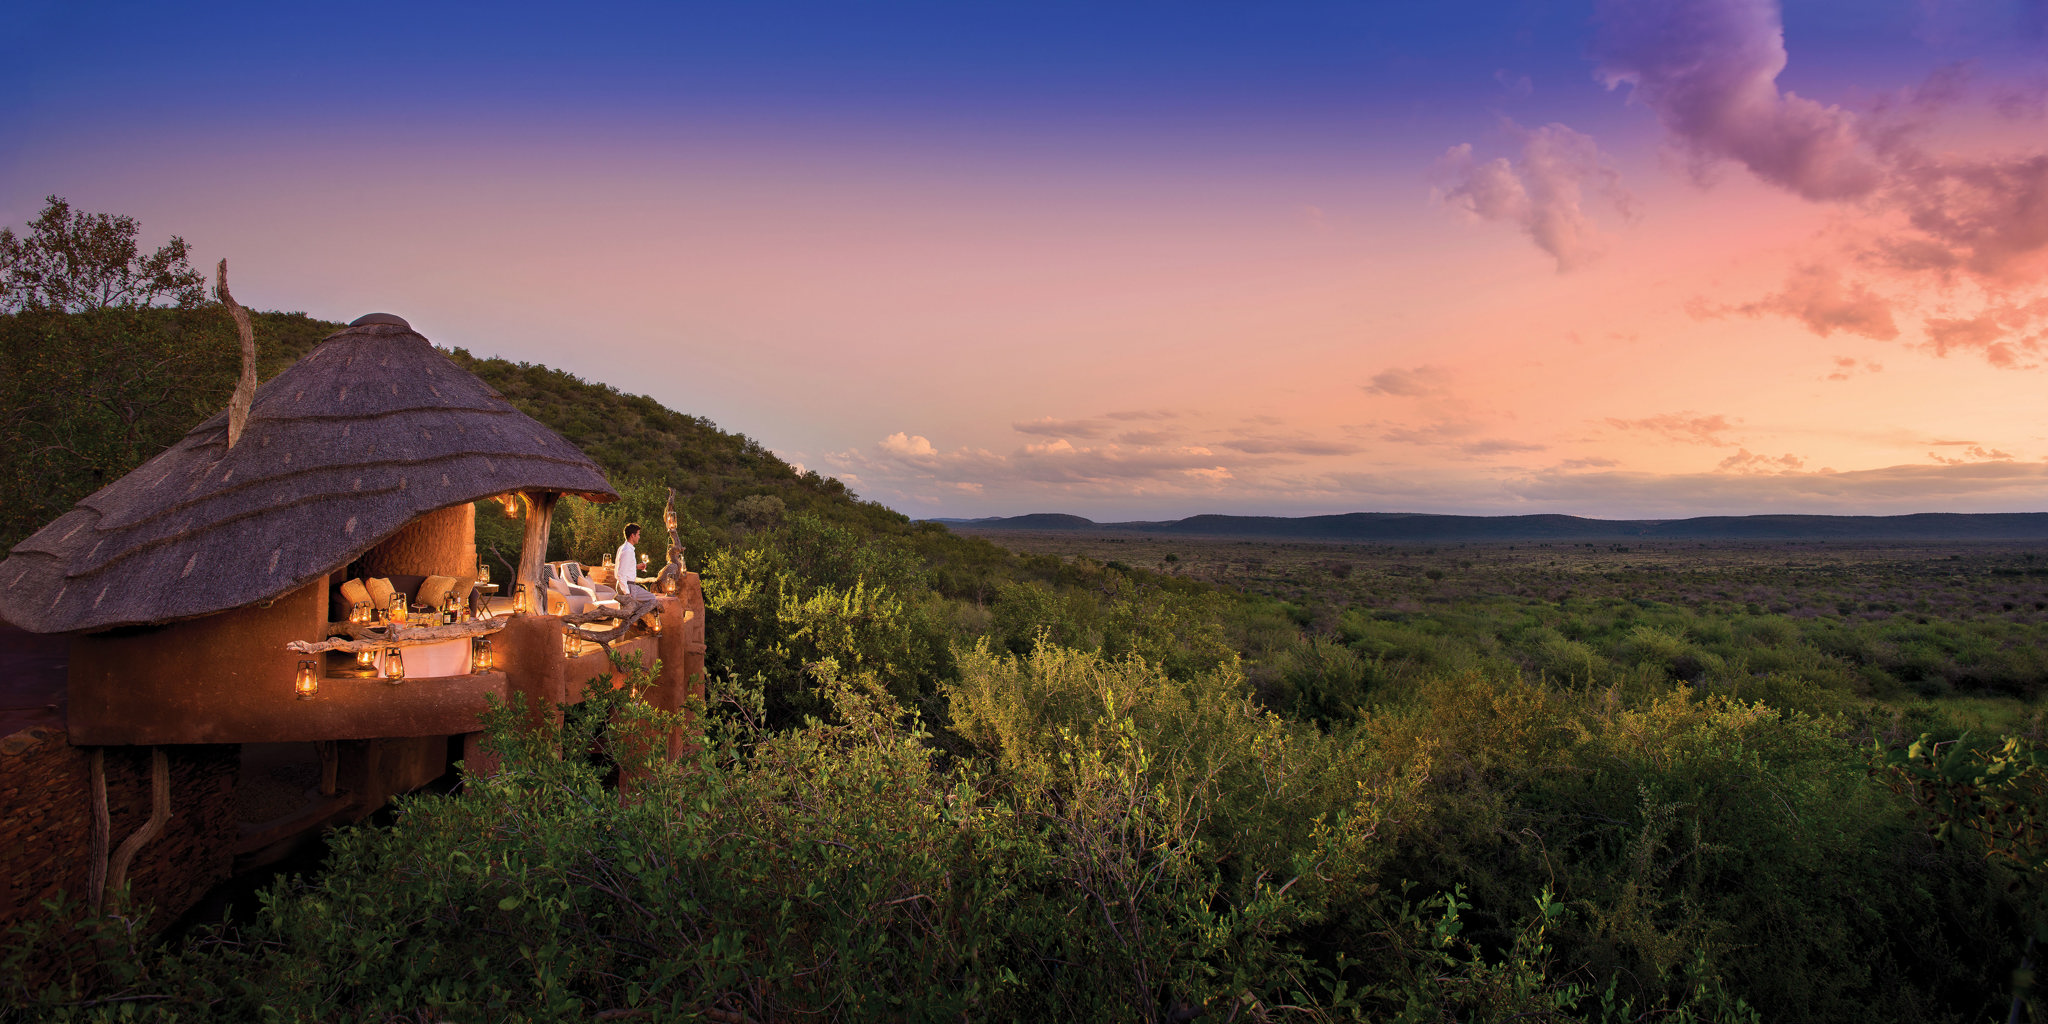 lelapa lodge at sunset, madikwe game reserve, south africa